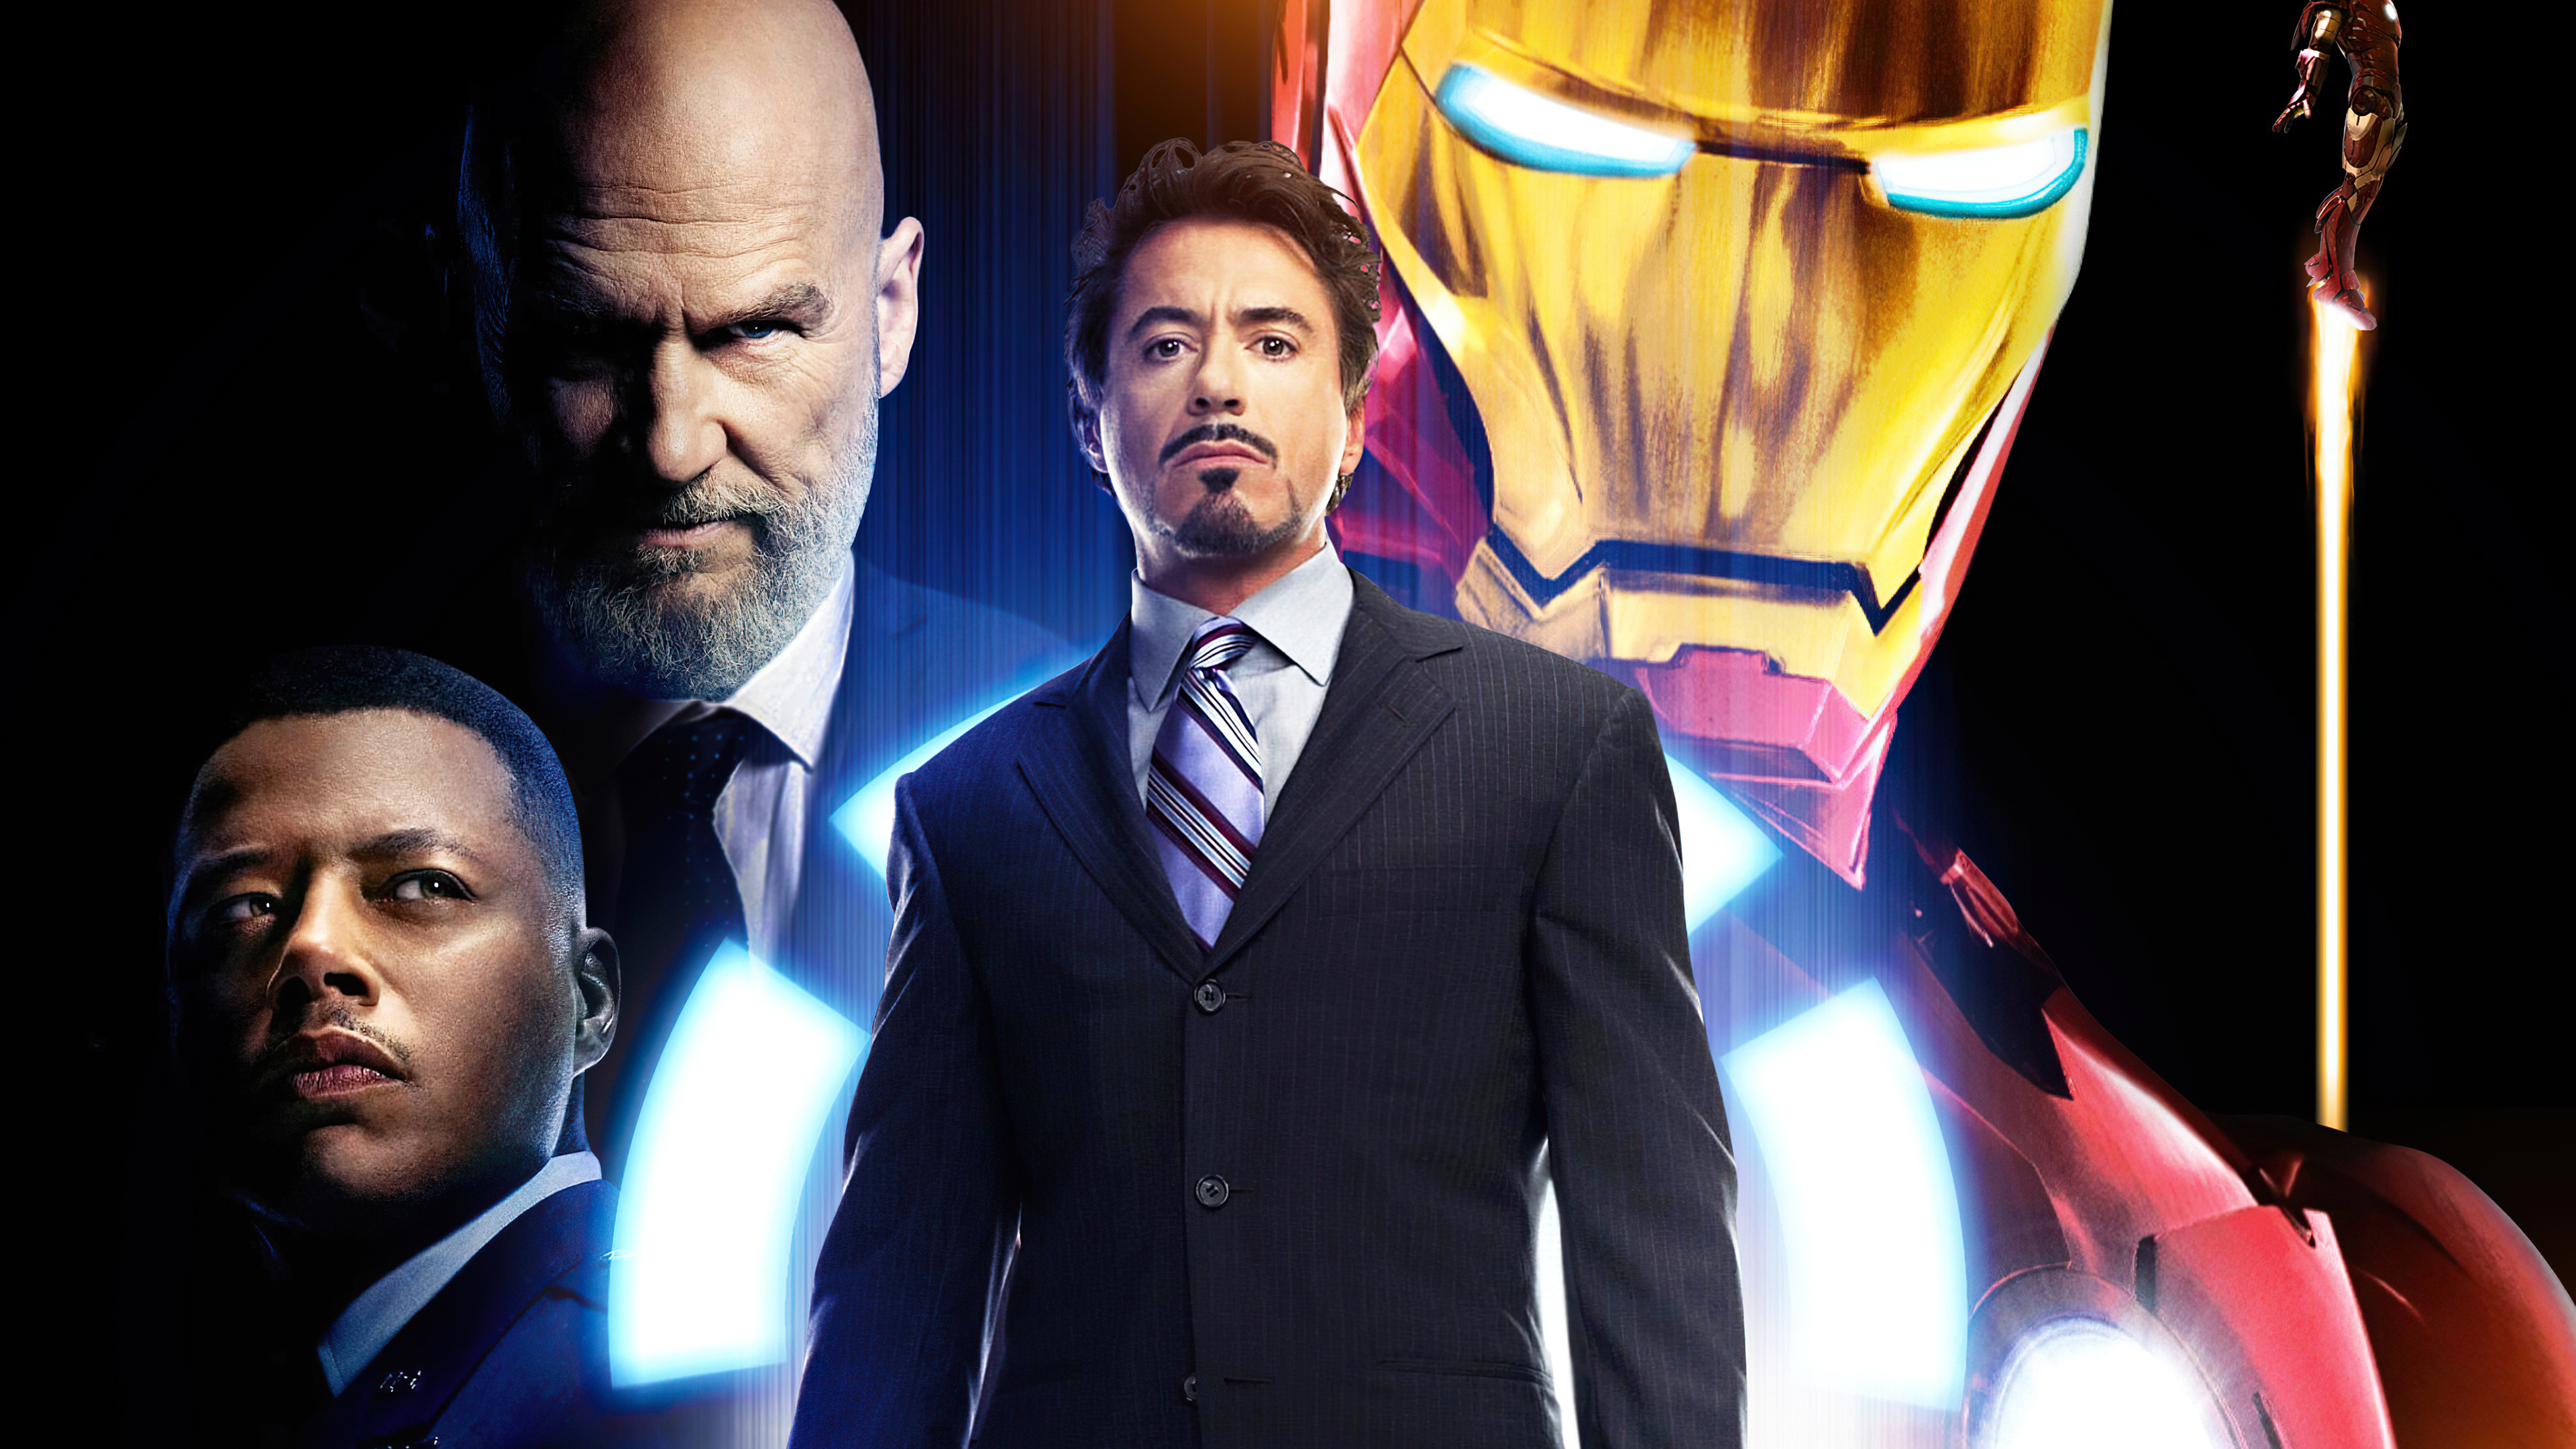 Obadiah Stane: Iron Man, A 2008 American superhero film, Poster, Jeff Bridges. 3840x2160 4K Background.